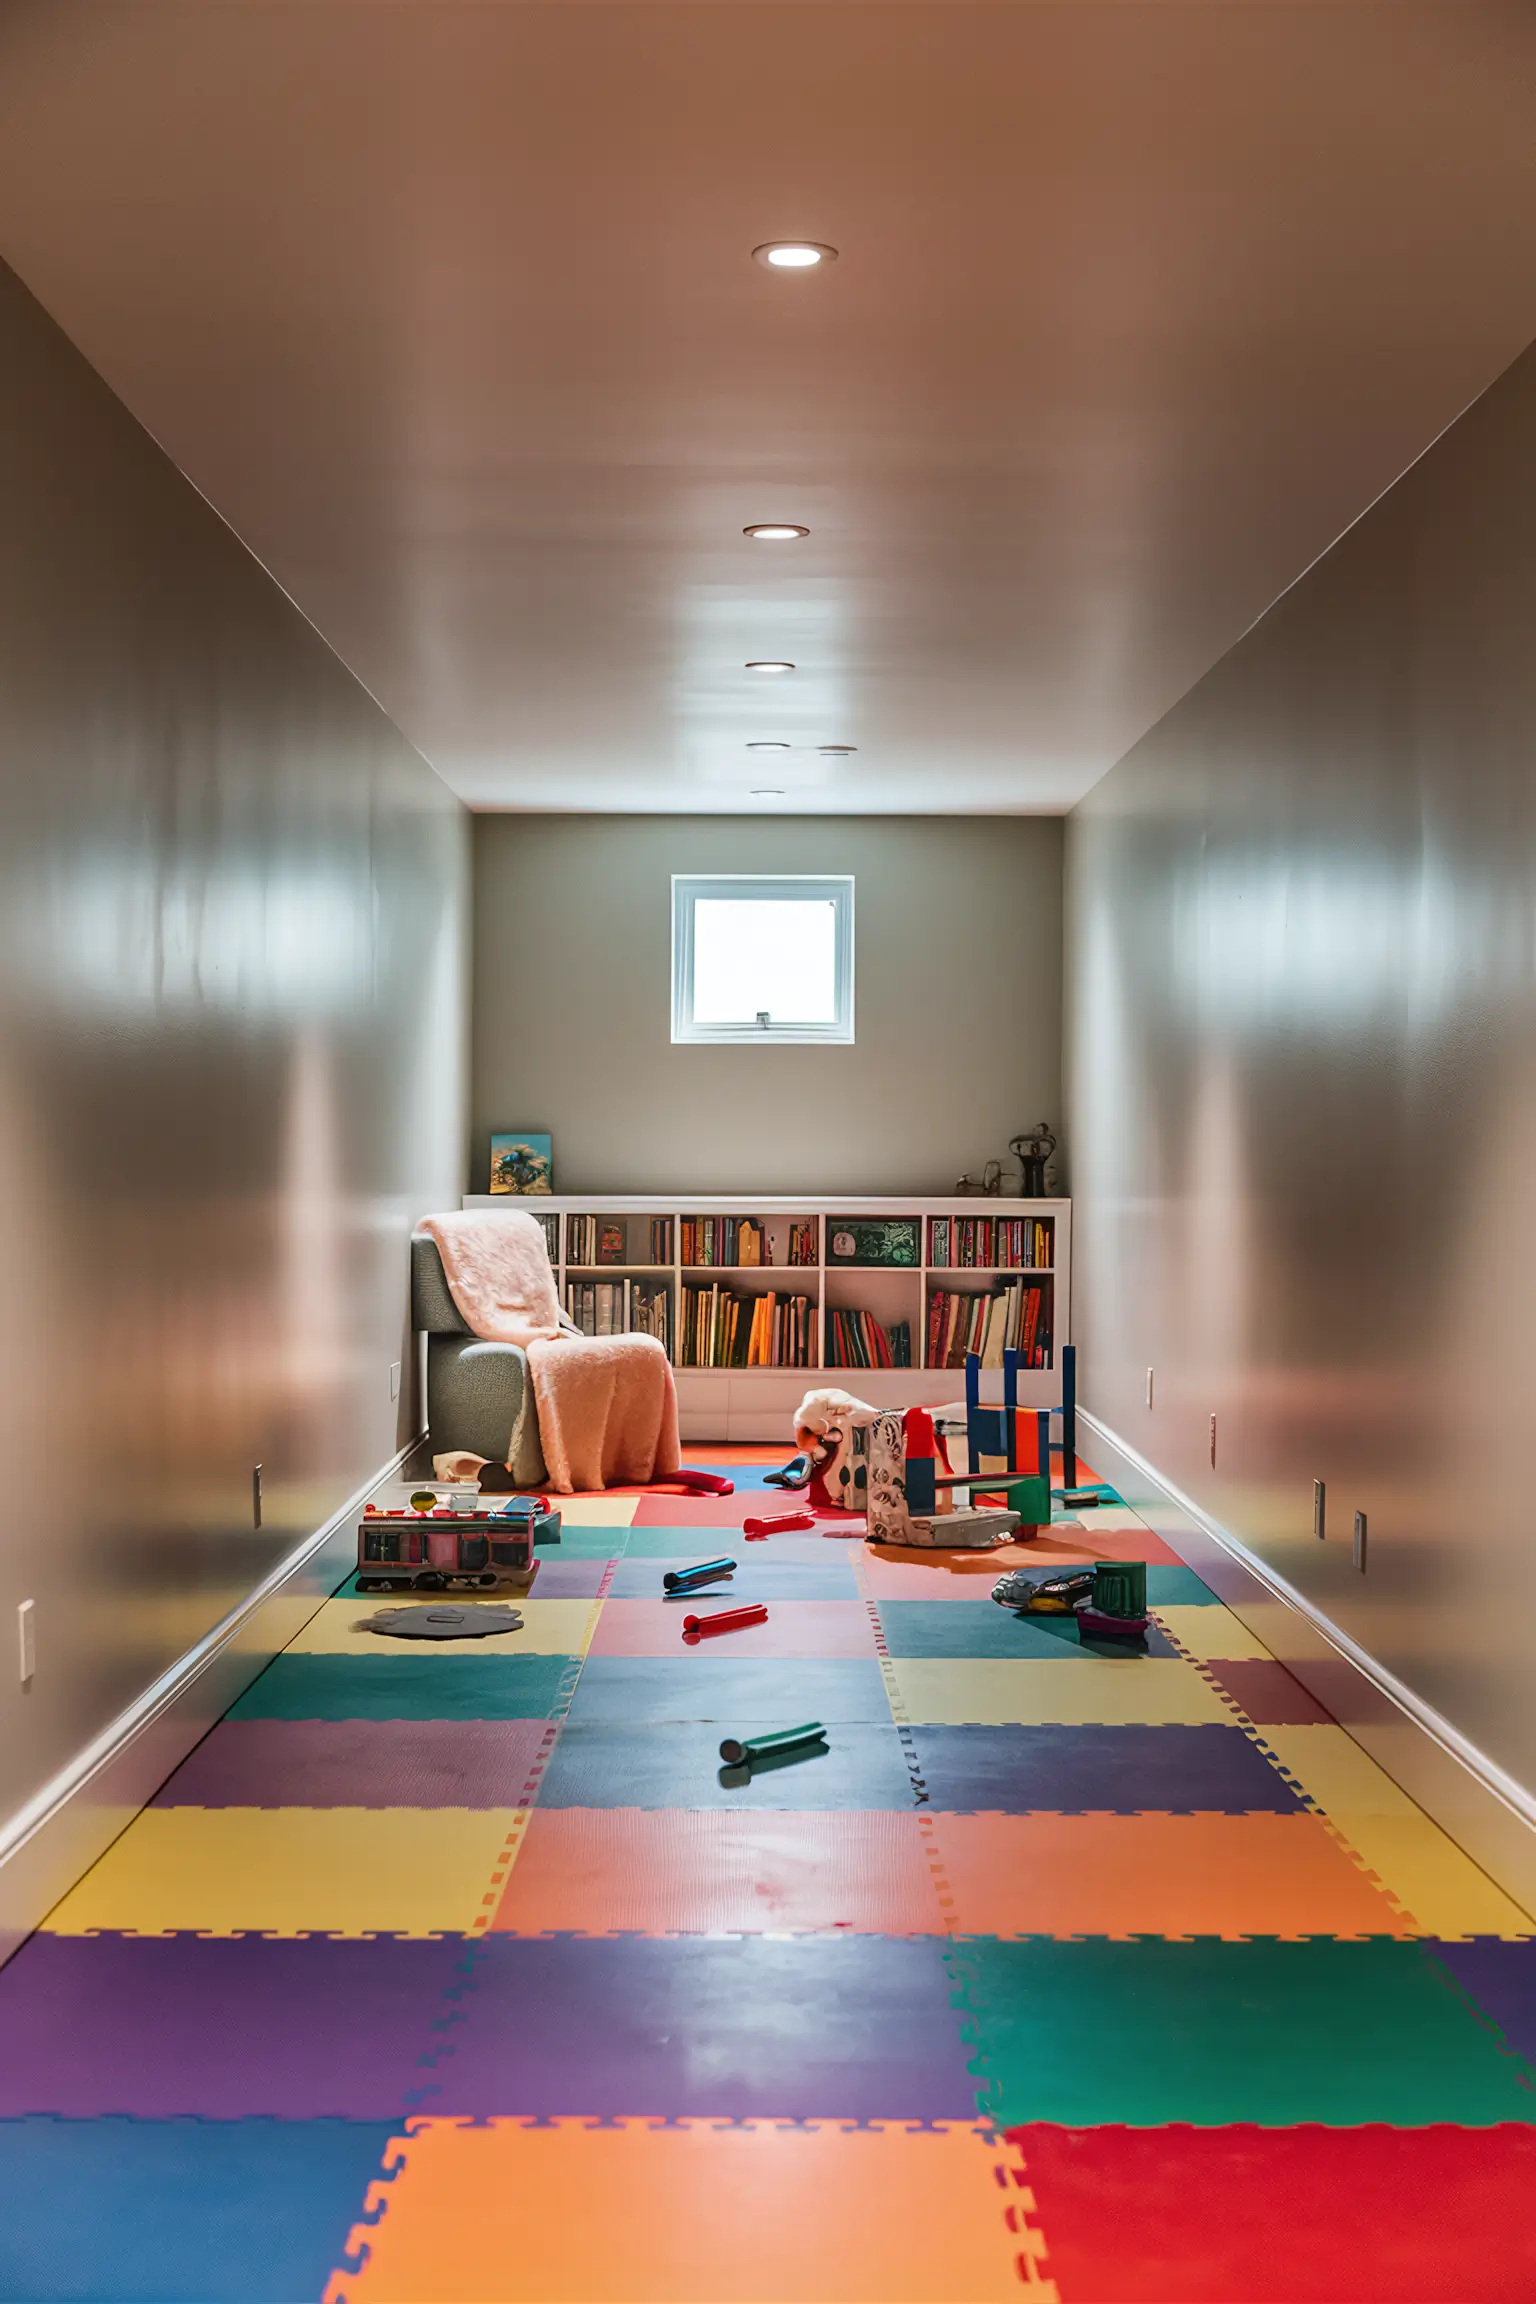 Minimalistic basement playroom with colorful foam mat flooring.